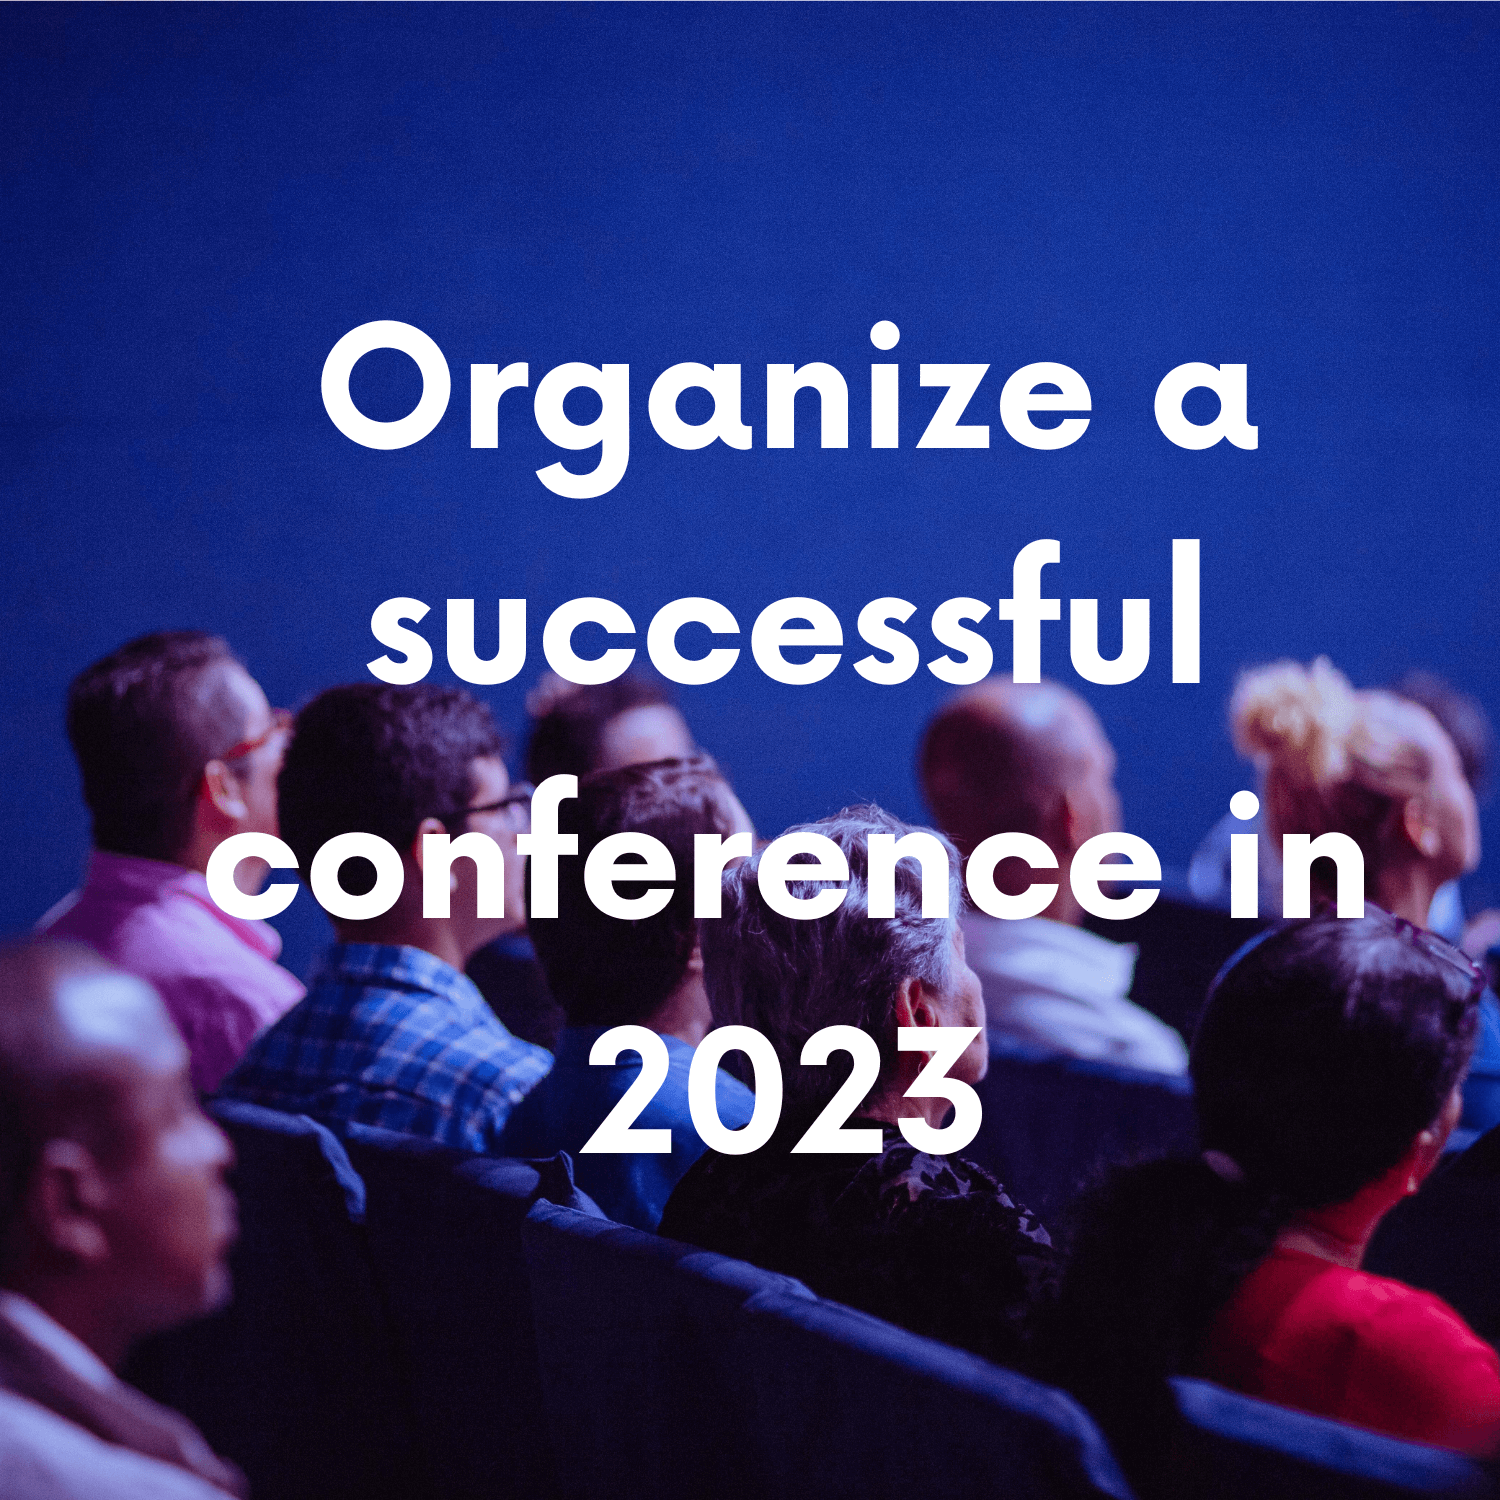 Organize a successful conference in 2023